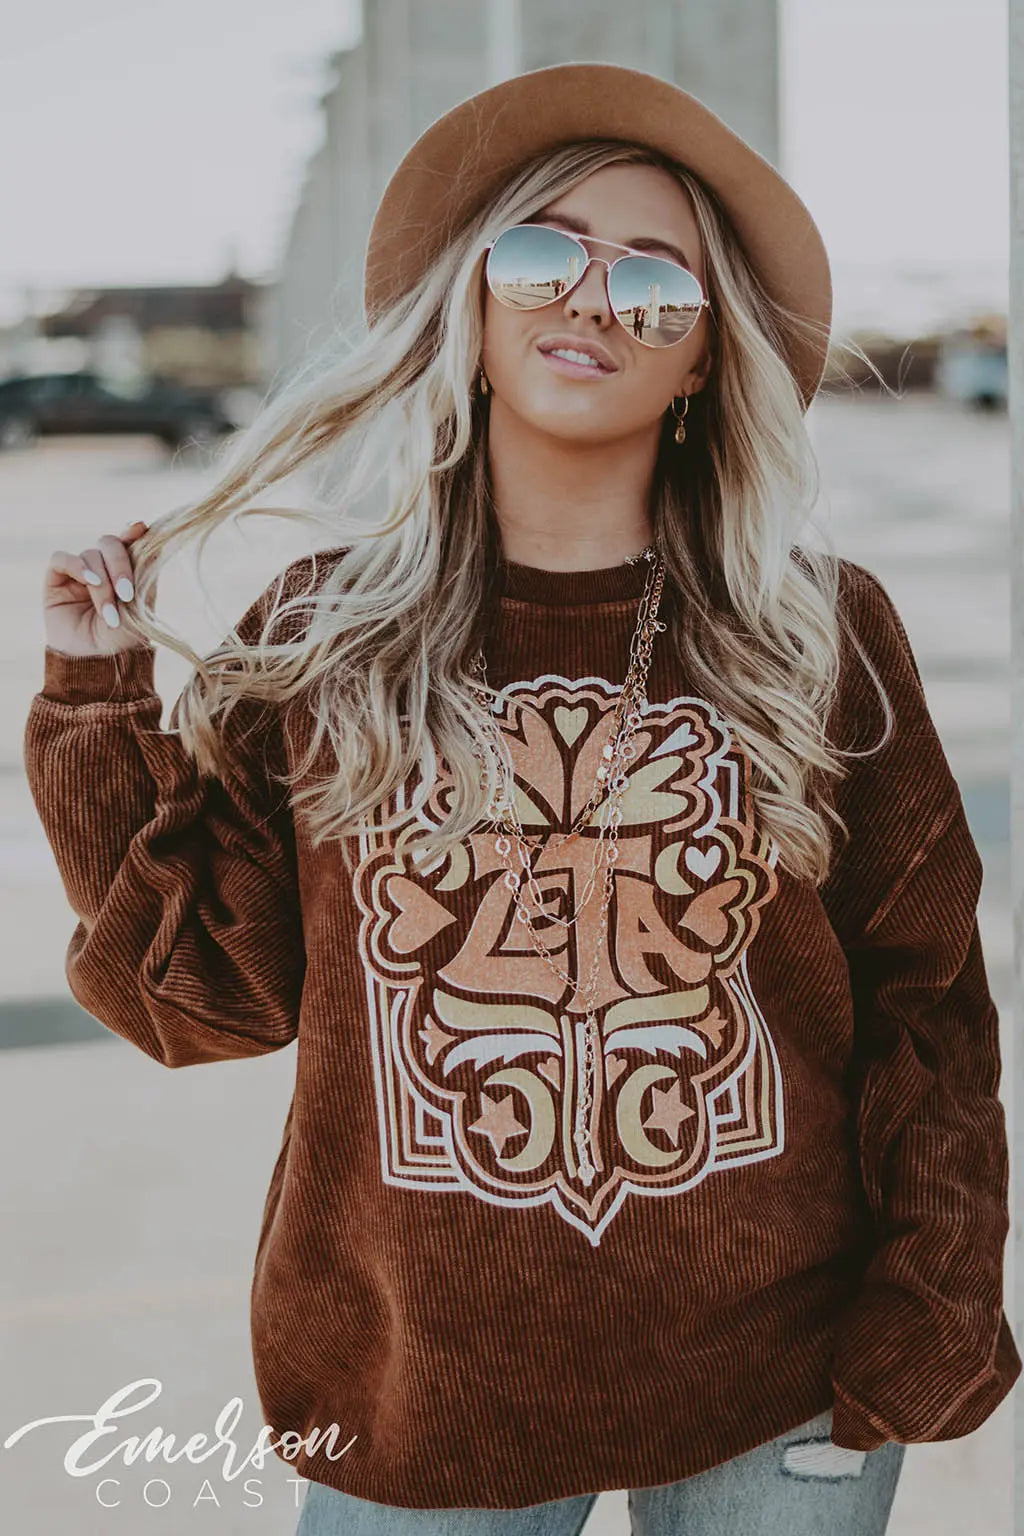 Zeta Tau Alpha Vintage Brown Corduroy Sweatshirt